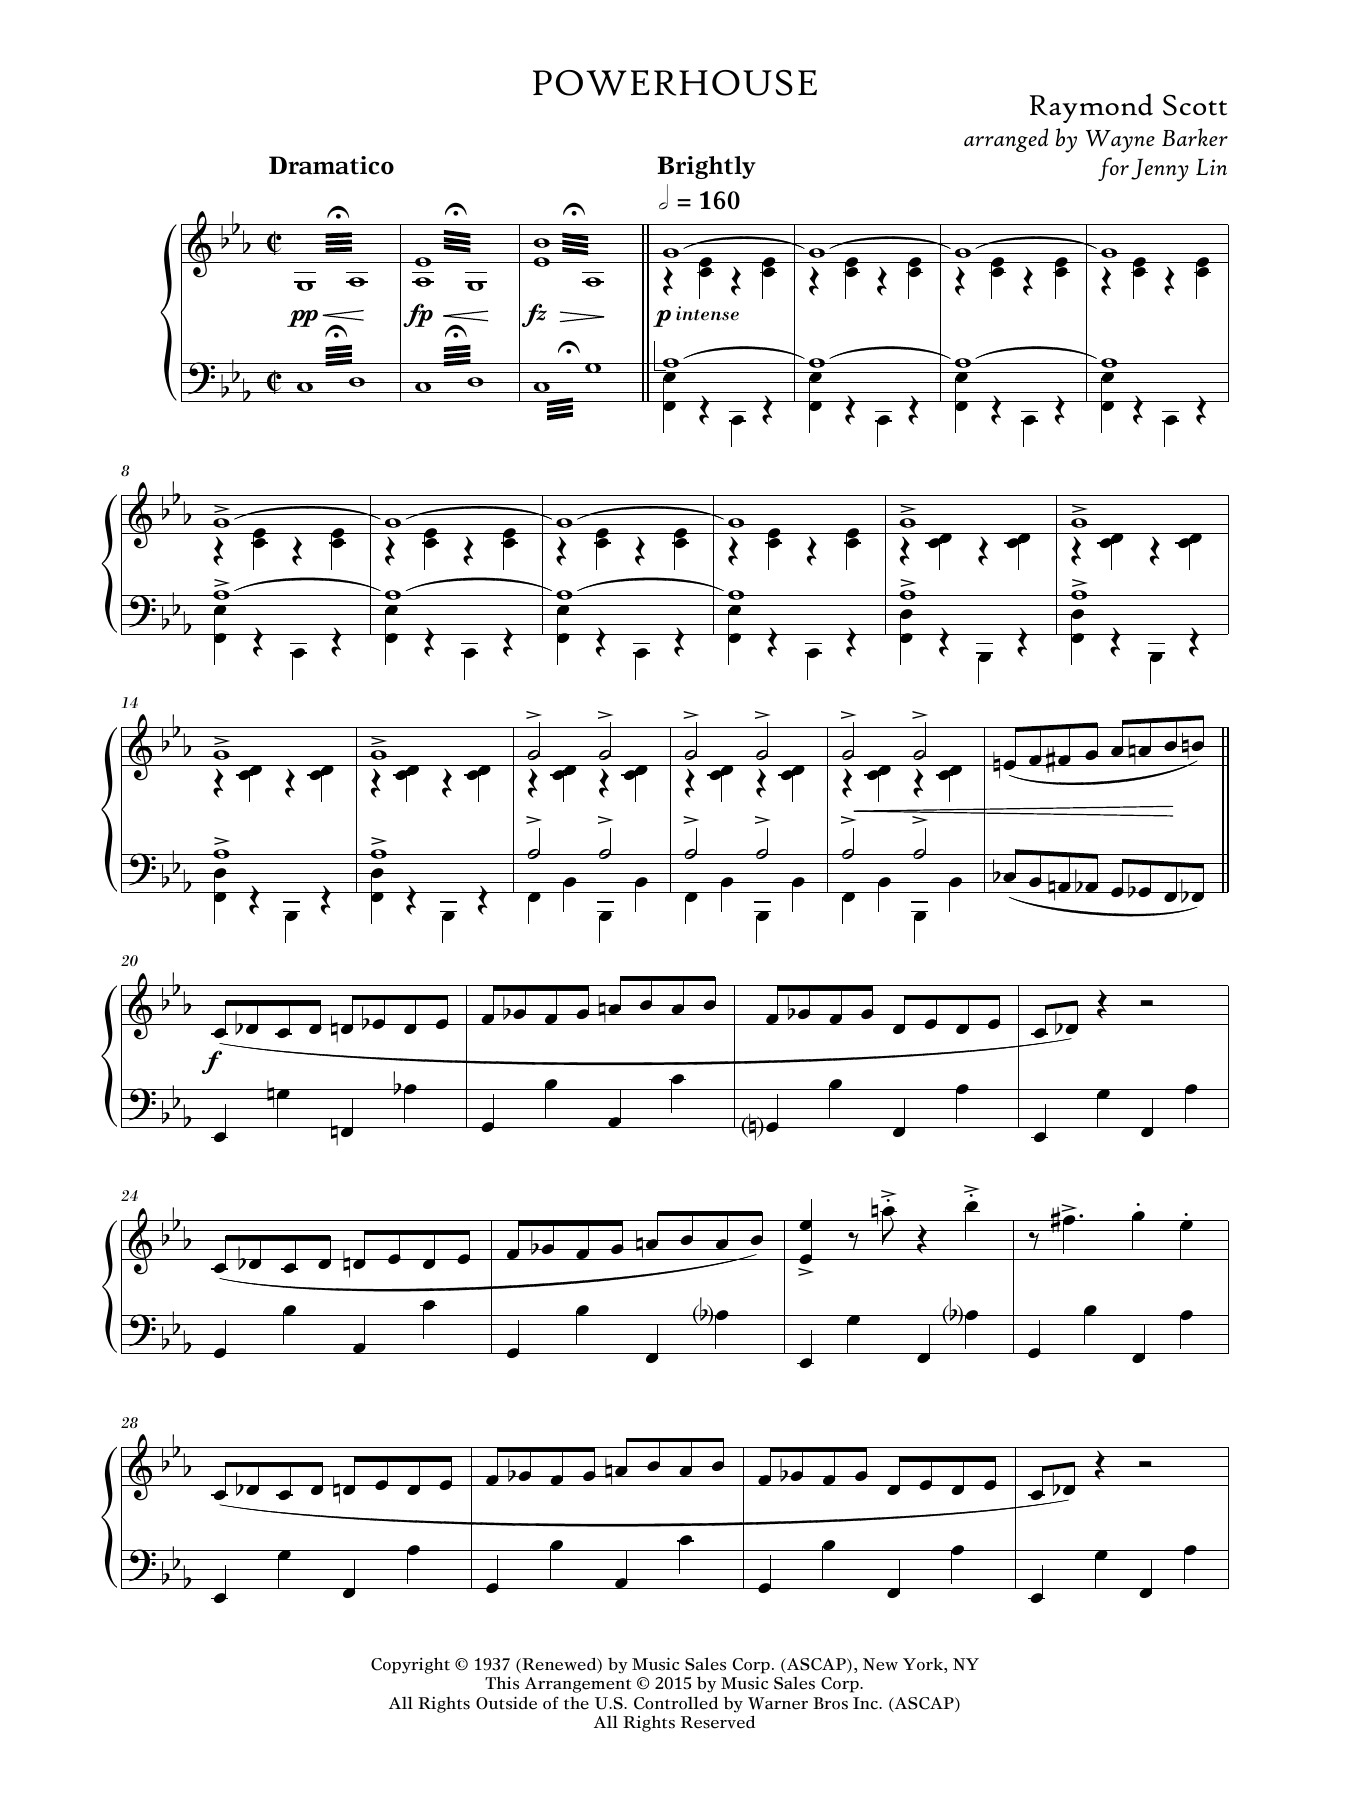 Raymond Scott Powerhouse (arr. Wayne Barker) Sheet Music Notes & Chords for Piano - Download or Print PDF